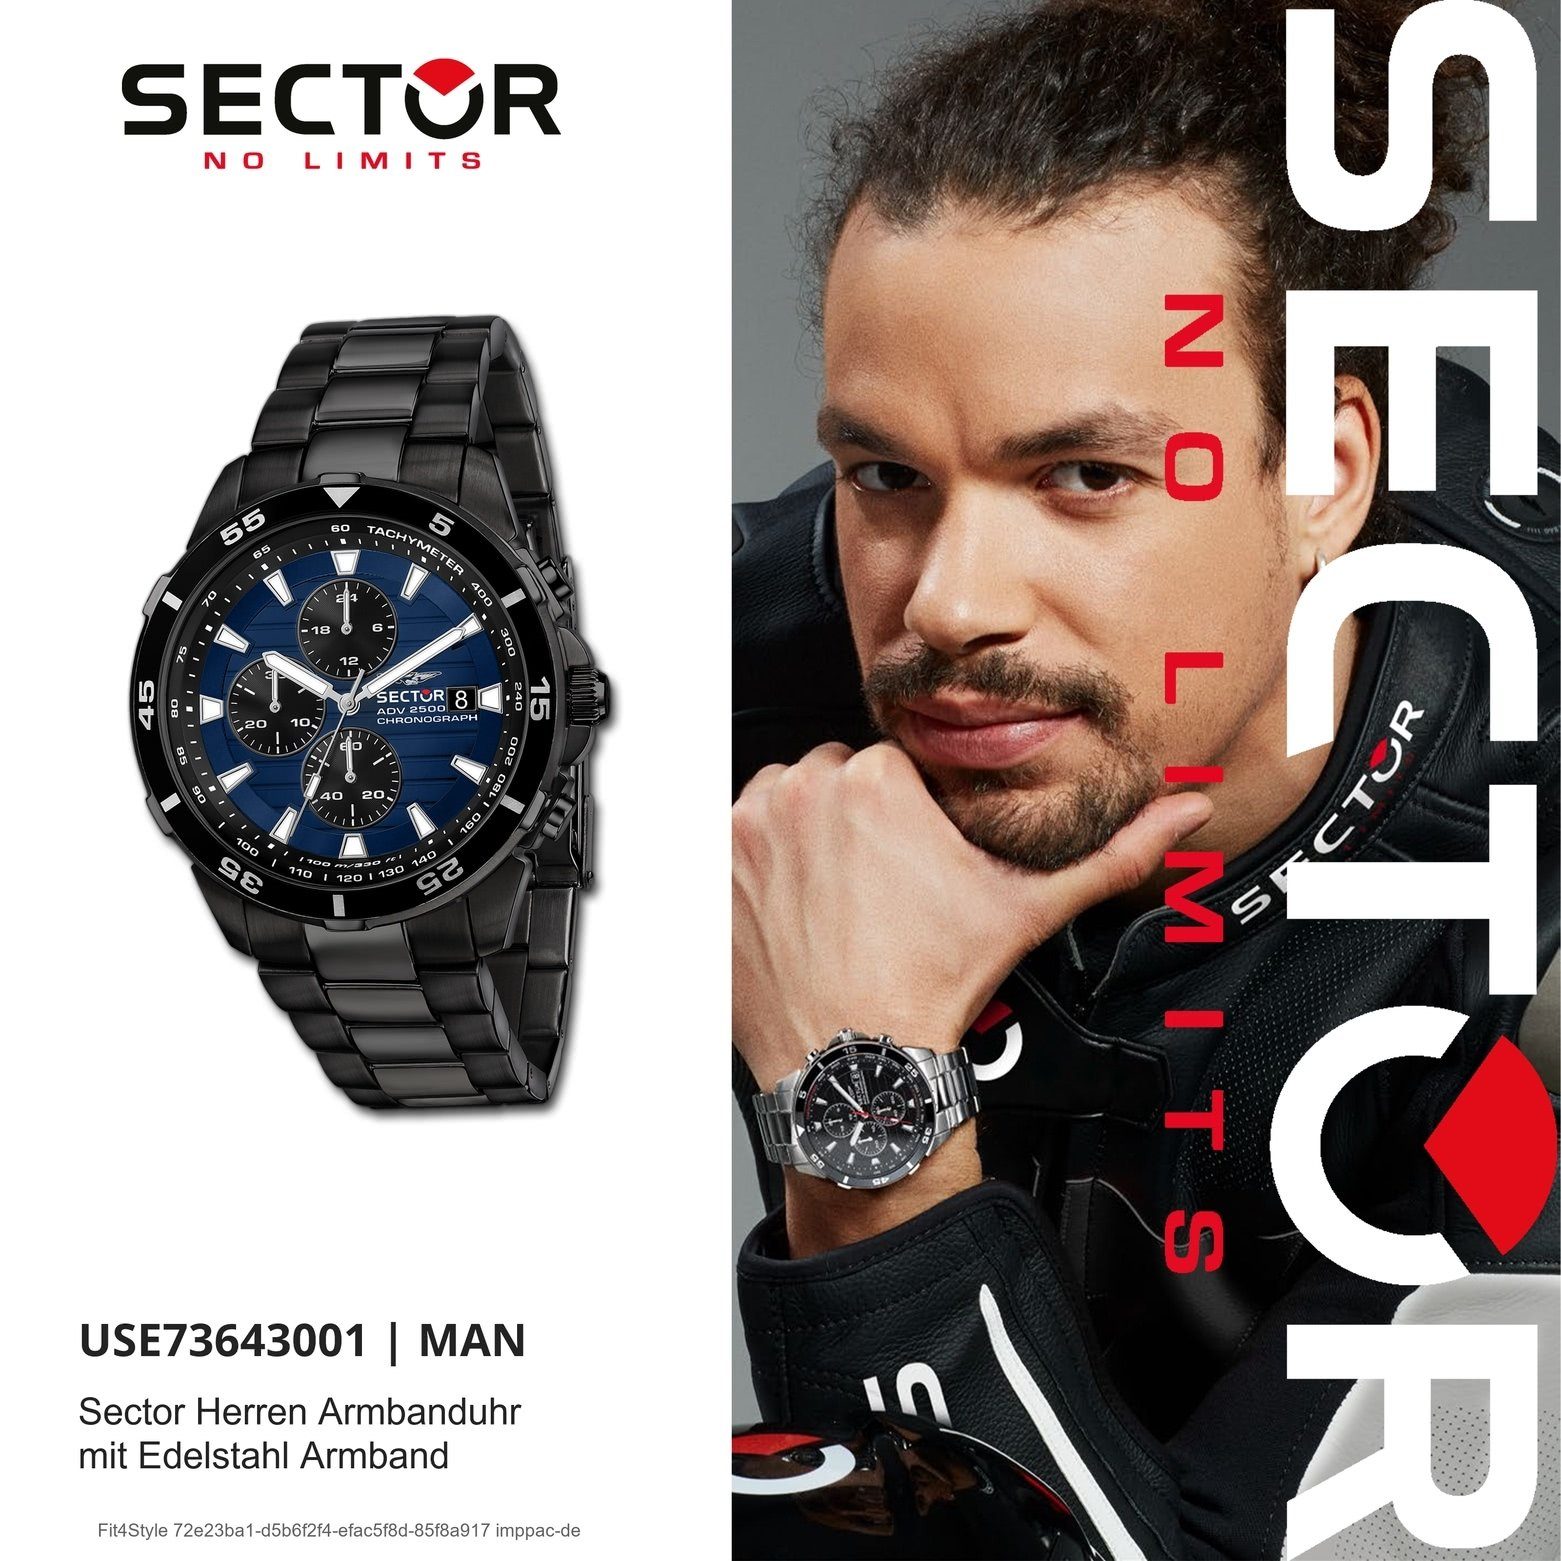 Sector Herren Chrono, groß Armbanduhr Armbanduhr schwarz, rund, Edelstahlarmband Chronograph Fashion (45mm) Sector Herren